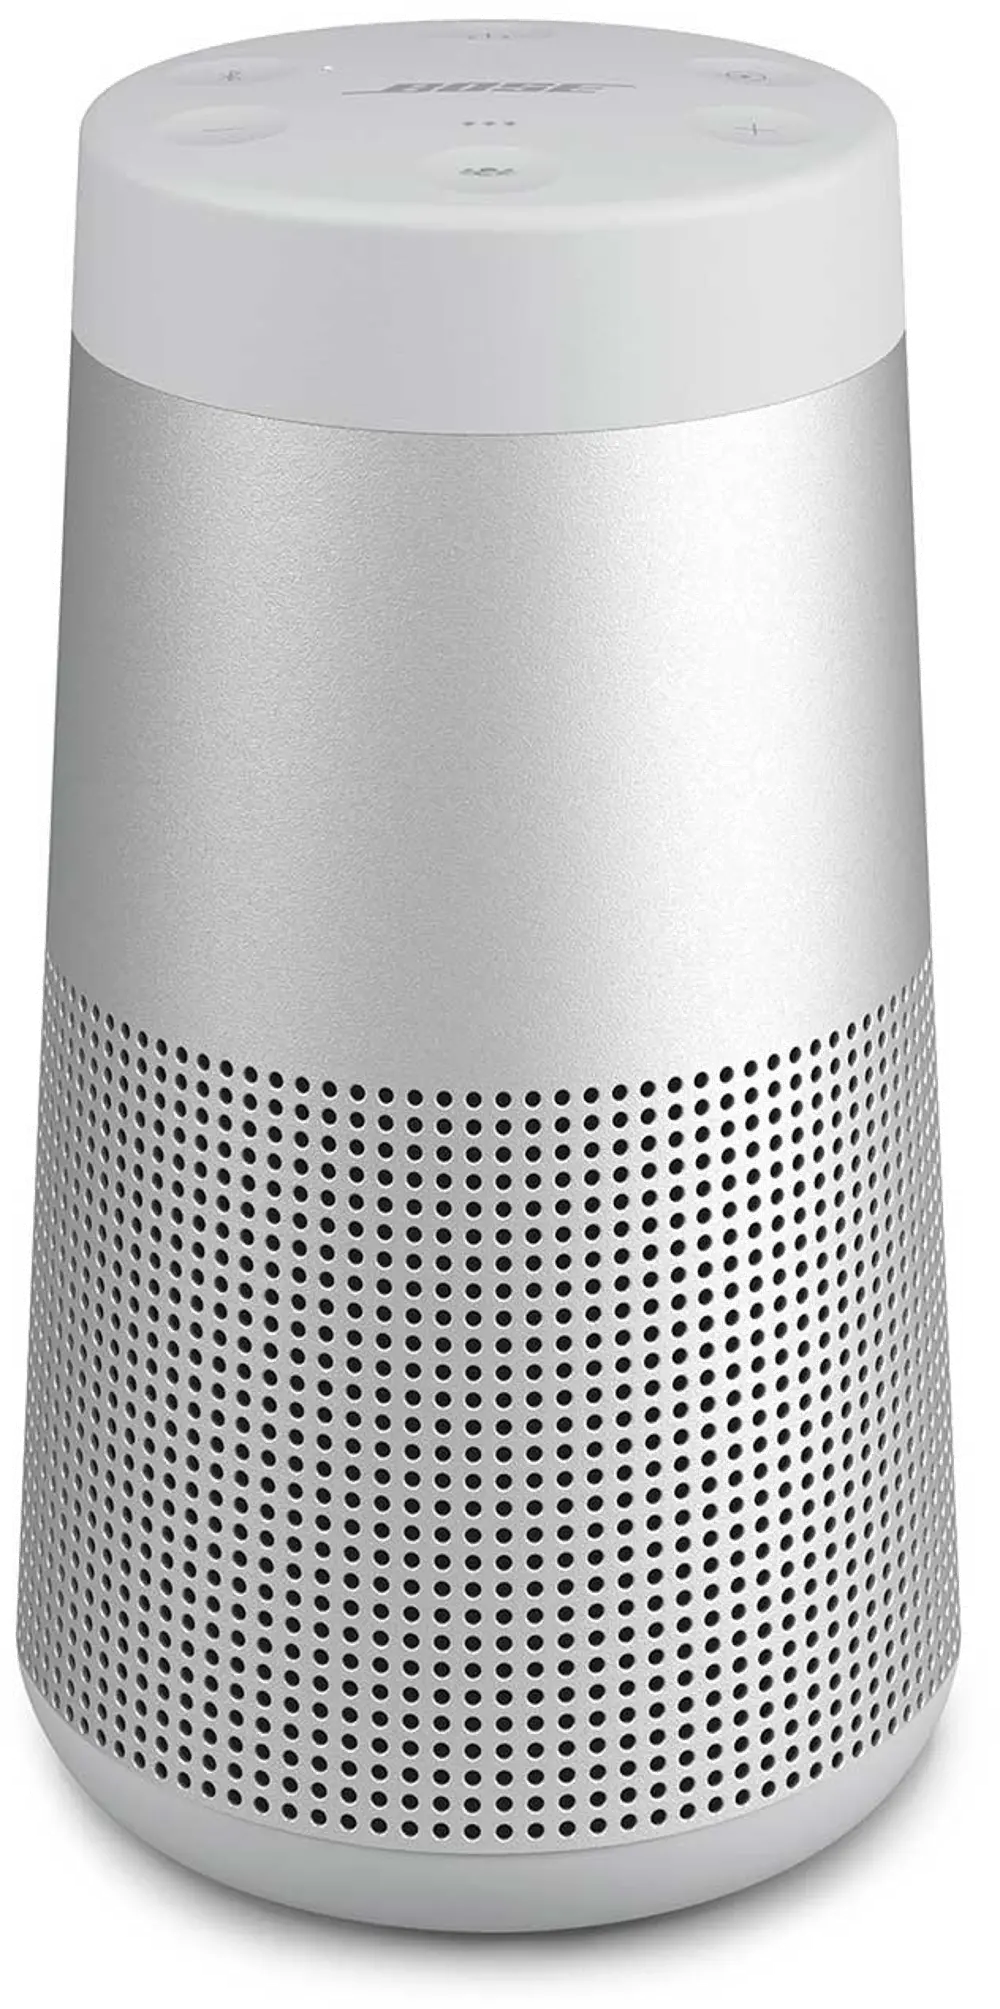 SNDLNK-REVOLVE,GRY Bose SoundLink Revolve Bluetooth Speaker - Gray-1